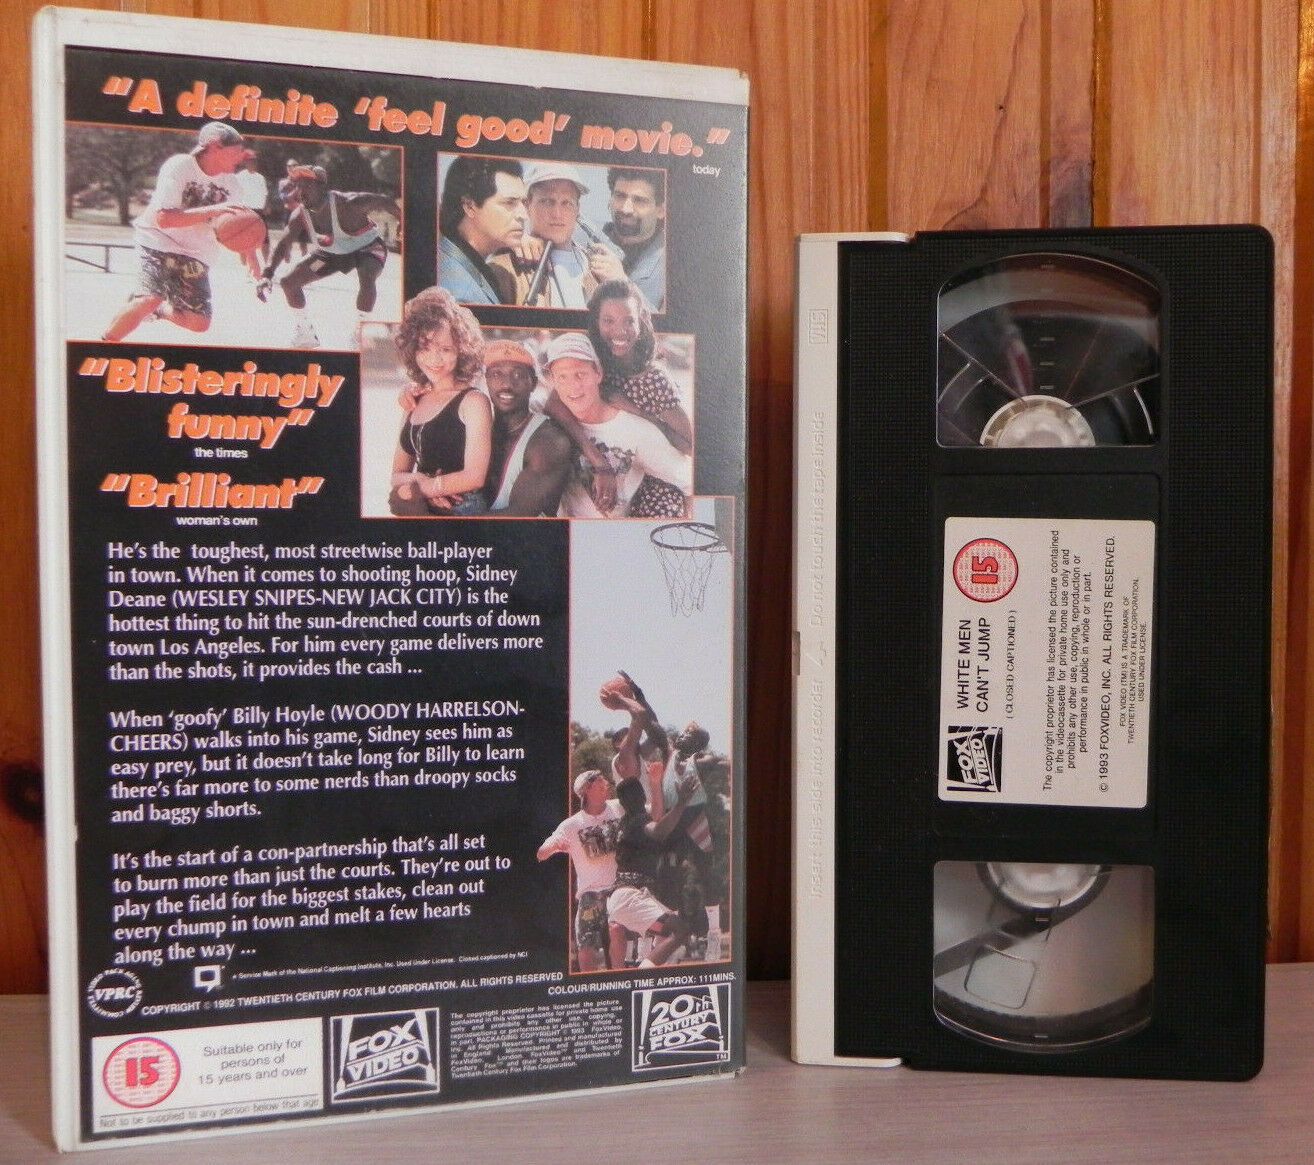 White Men Can't Jump - Masterful Comedy - Original Fox - BigBox Rental - Pal VHS-